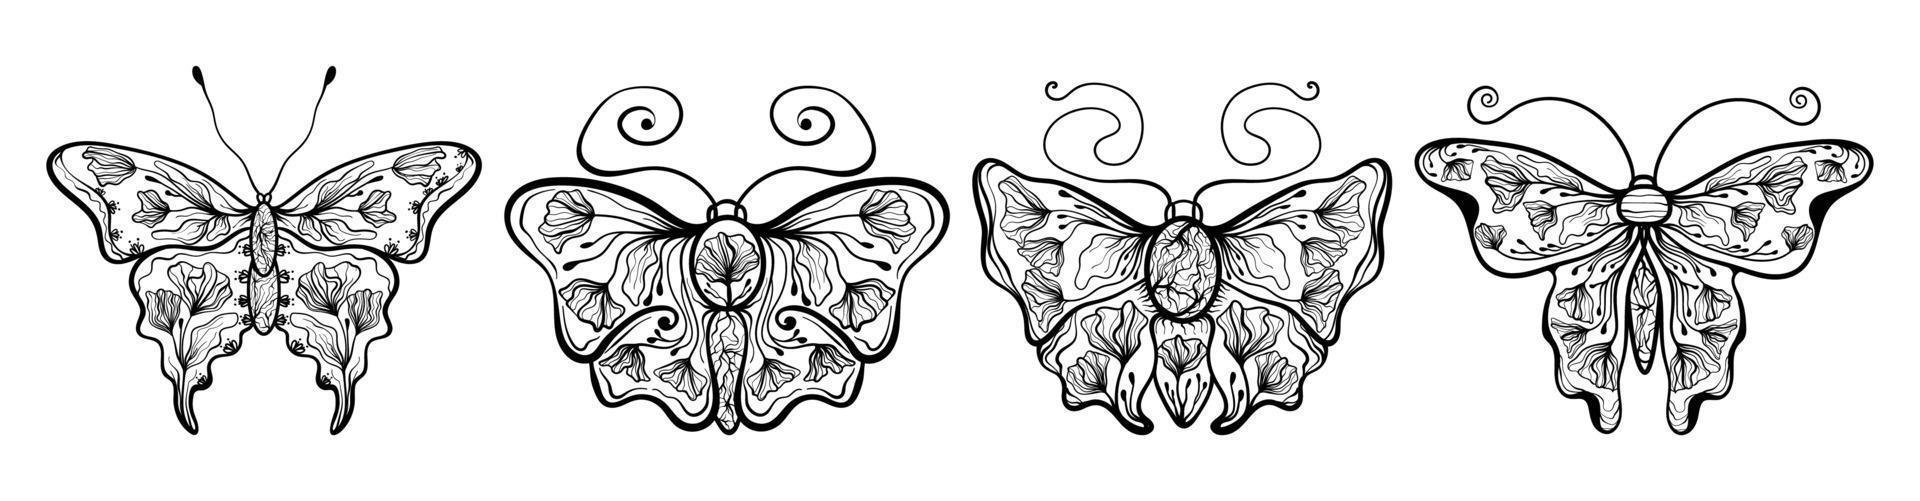 boho floral mariposa polilla insecto lineart conjunto vector ilustración 02